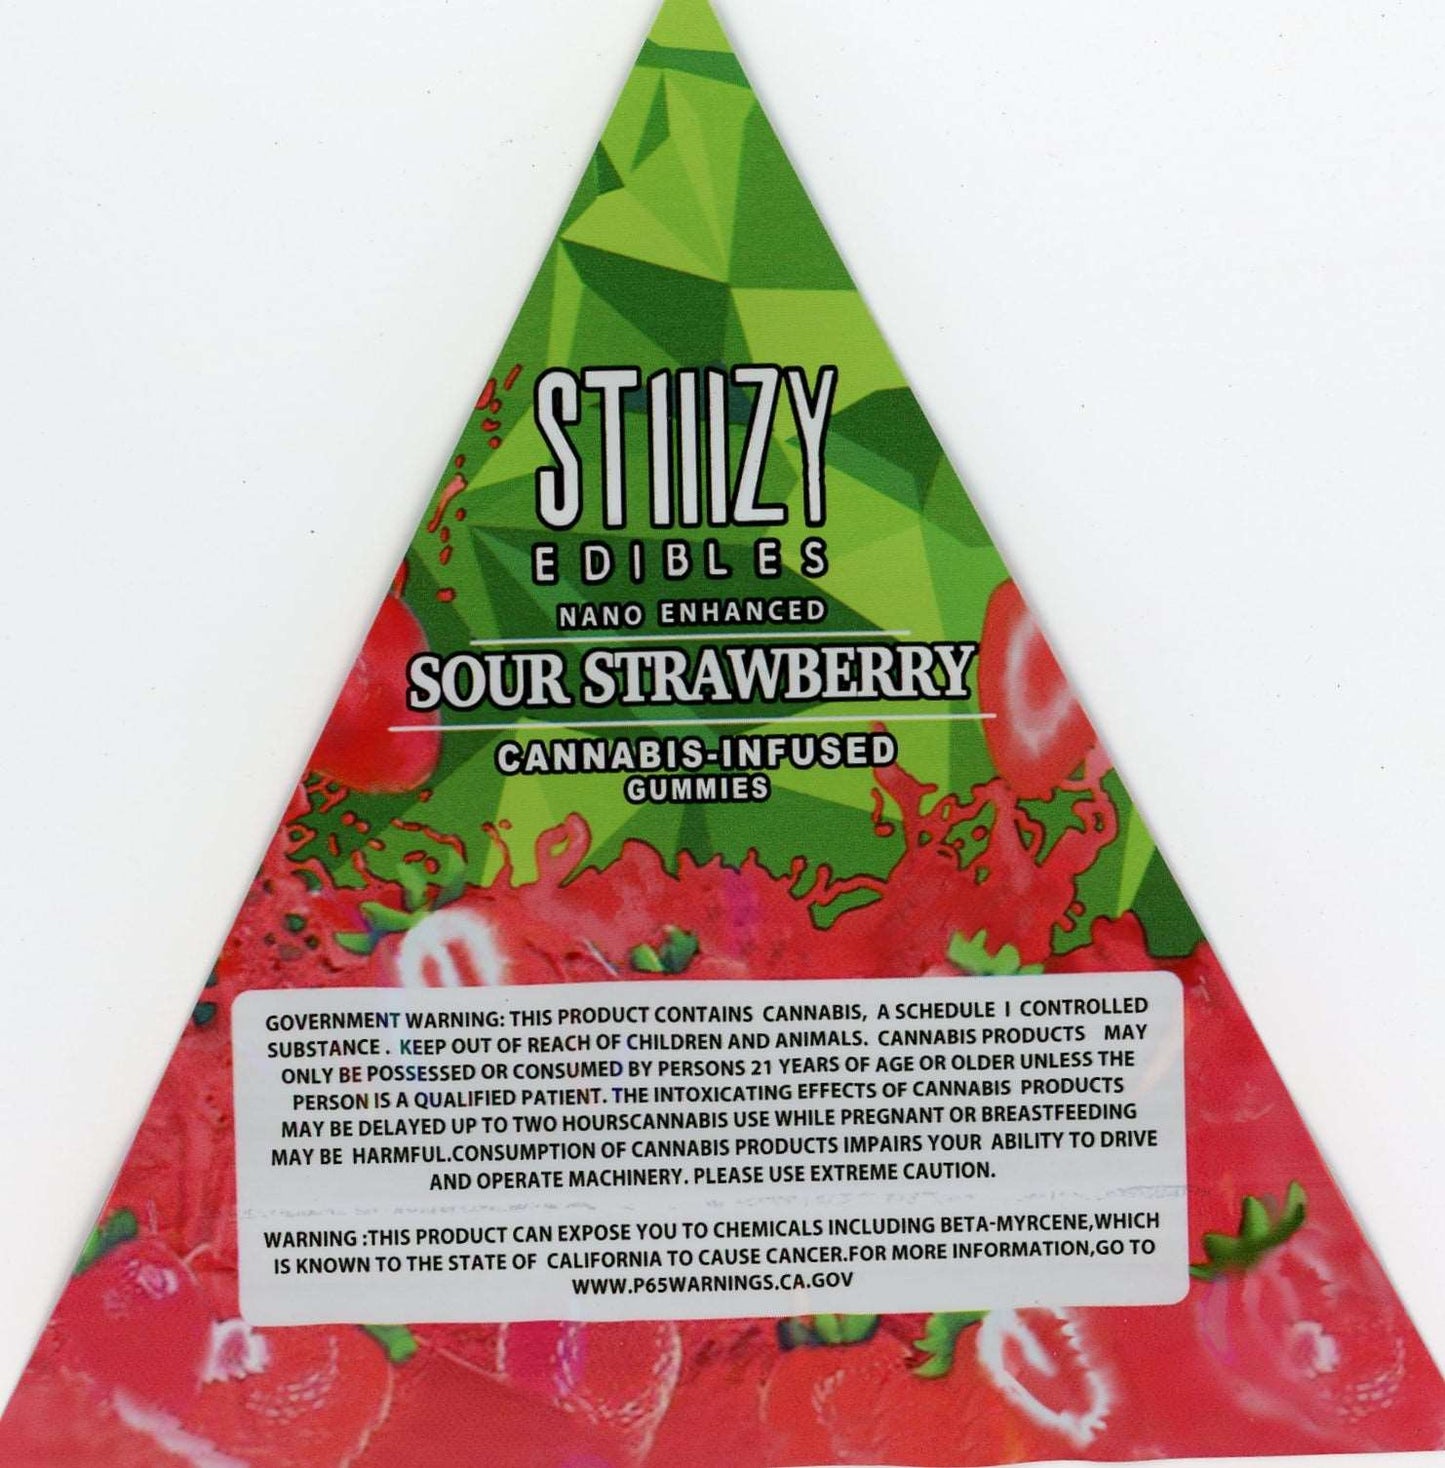 Sour Strawberry Gummies Mylar Bags Stiiizy MYLAR BAGS FOR EDIBLES, DIE-CUT MYLAR BAGS back (1)